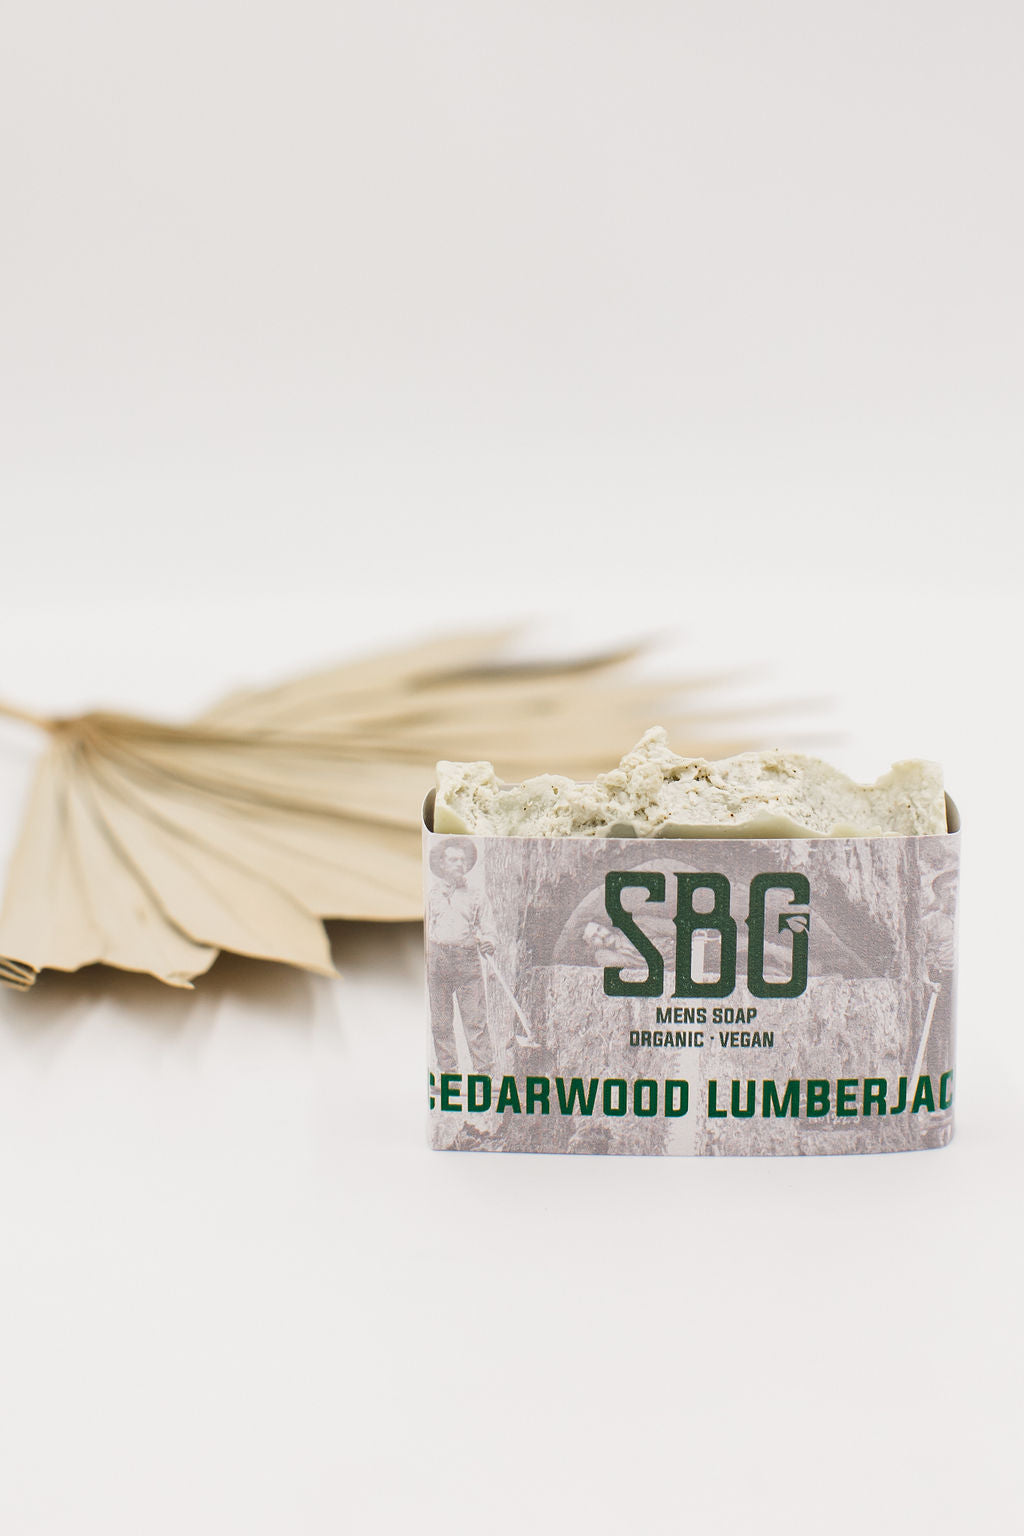 Cedarwood Lumberjack Soap